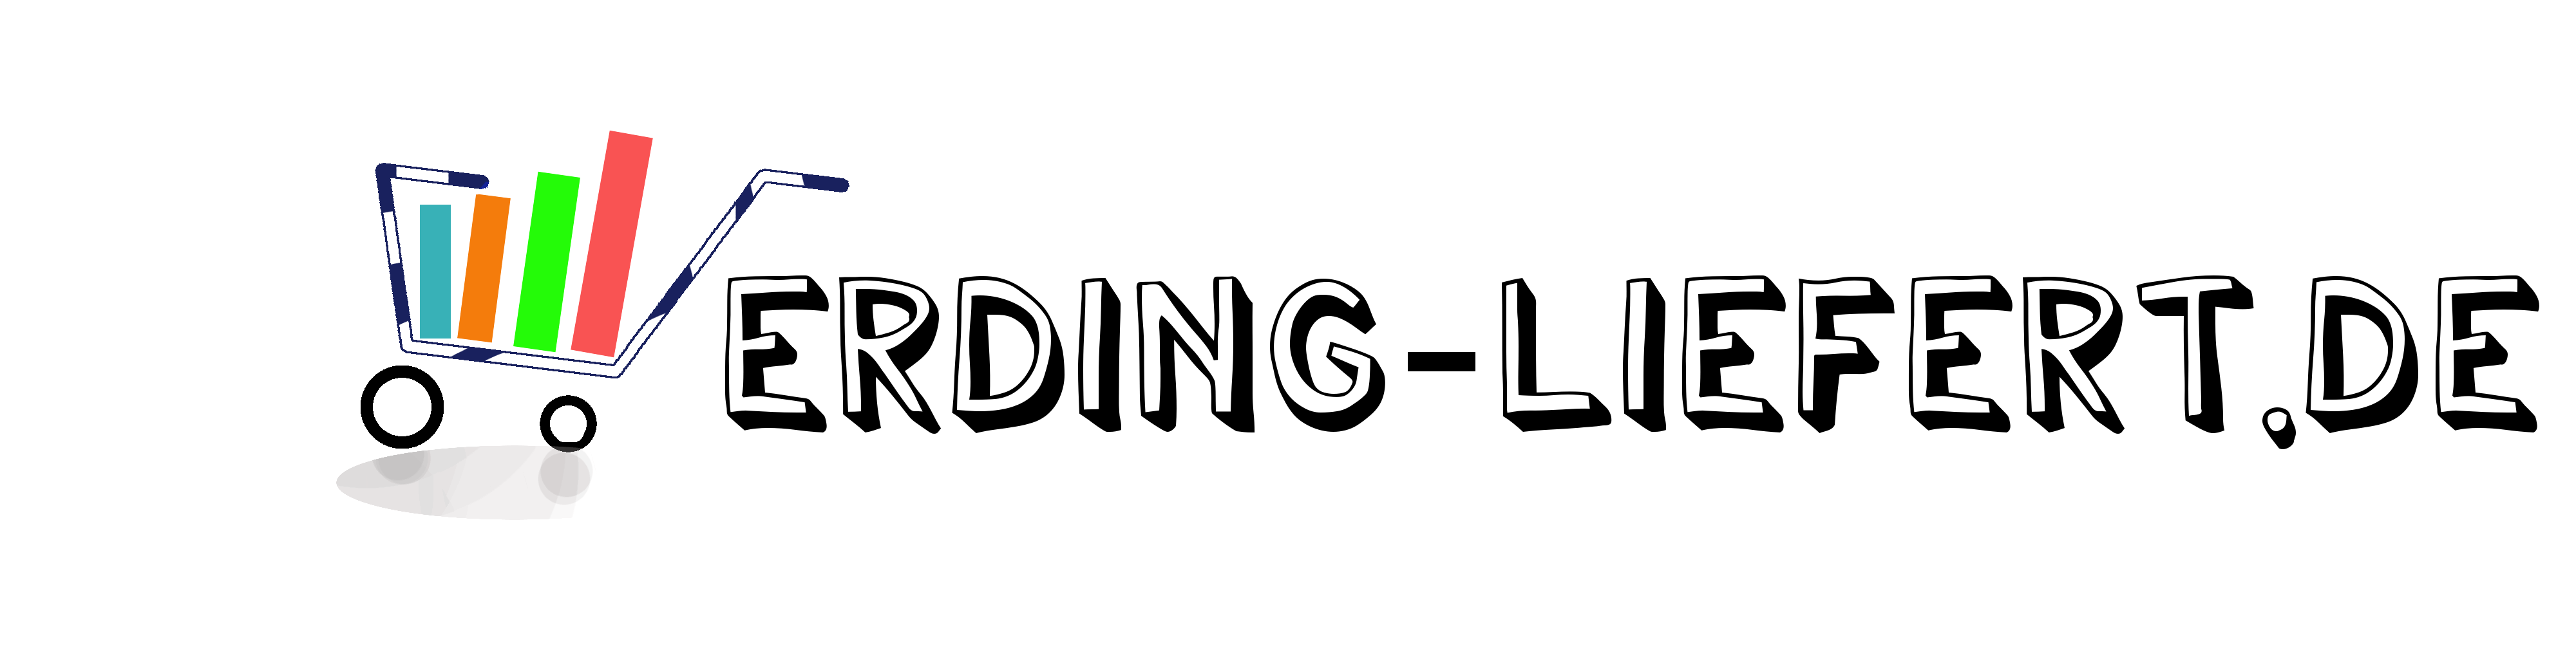 Logo der Erding Liefert